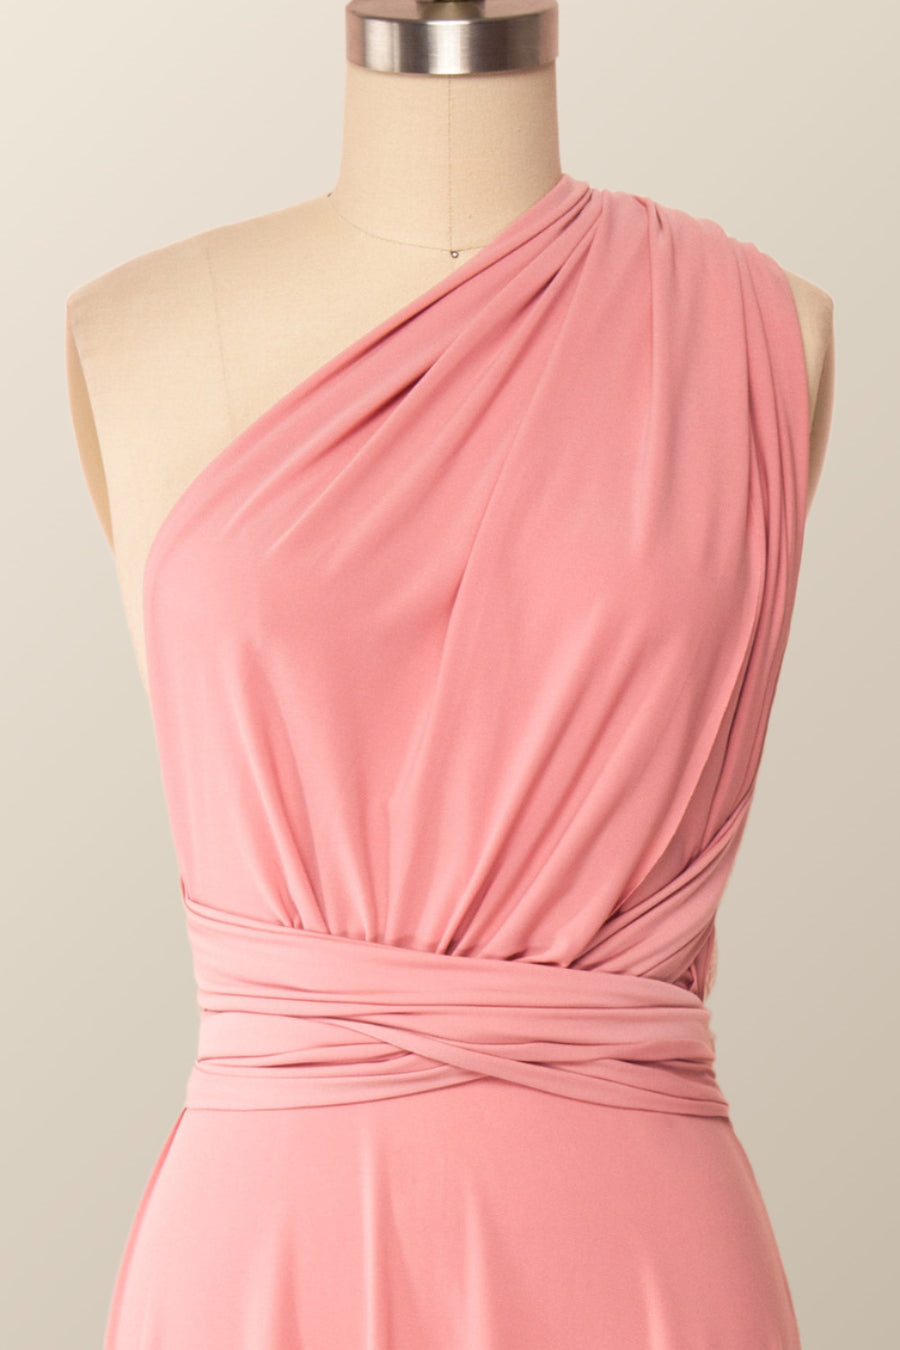 Rose Pink Convertible Long Party Dress